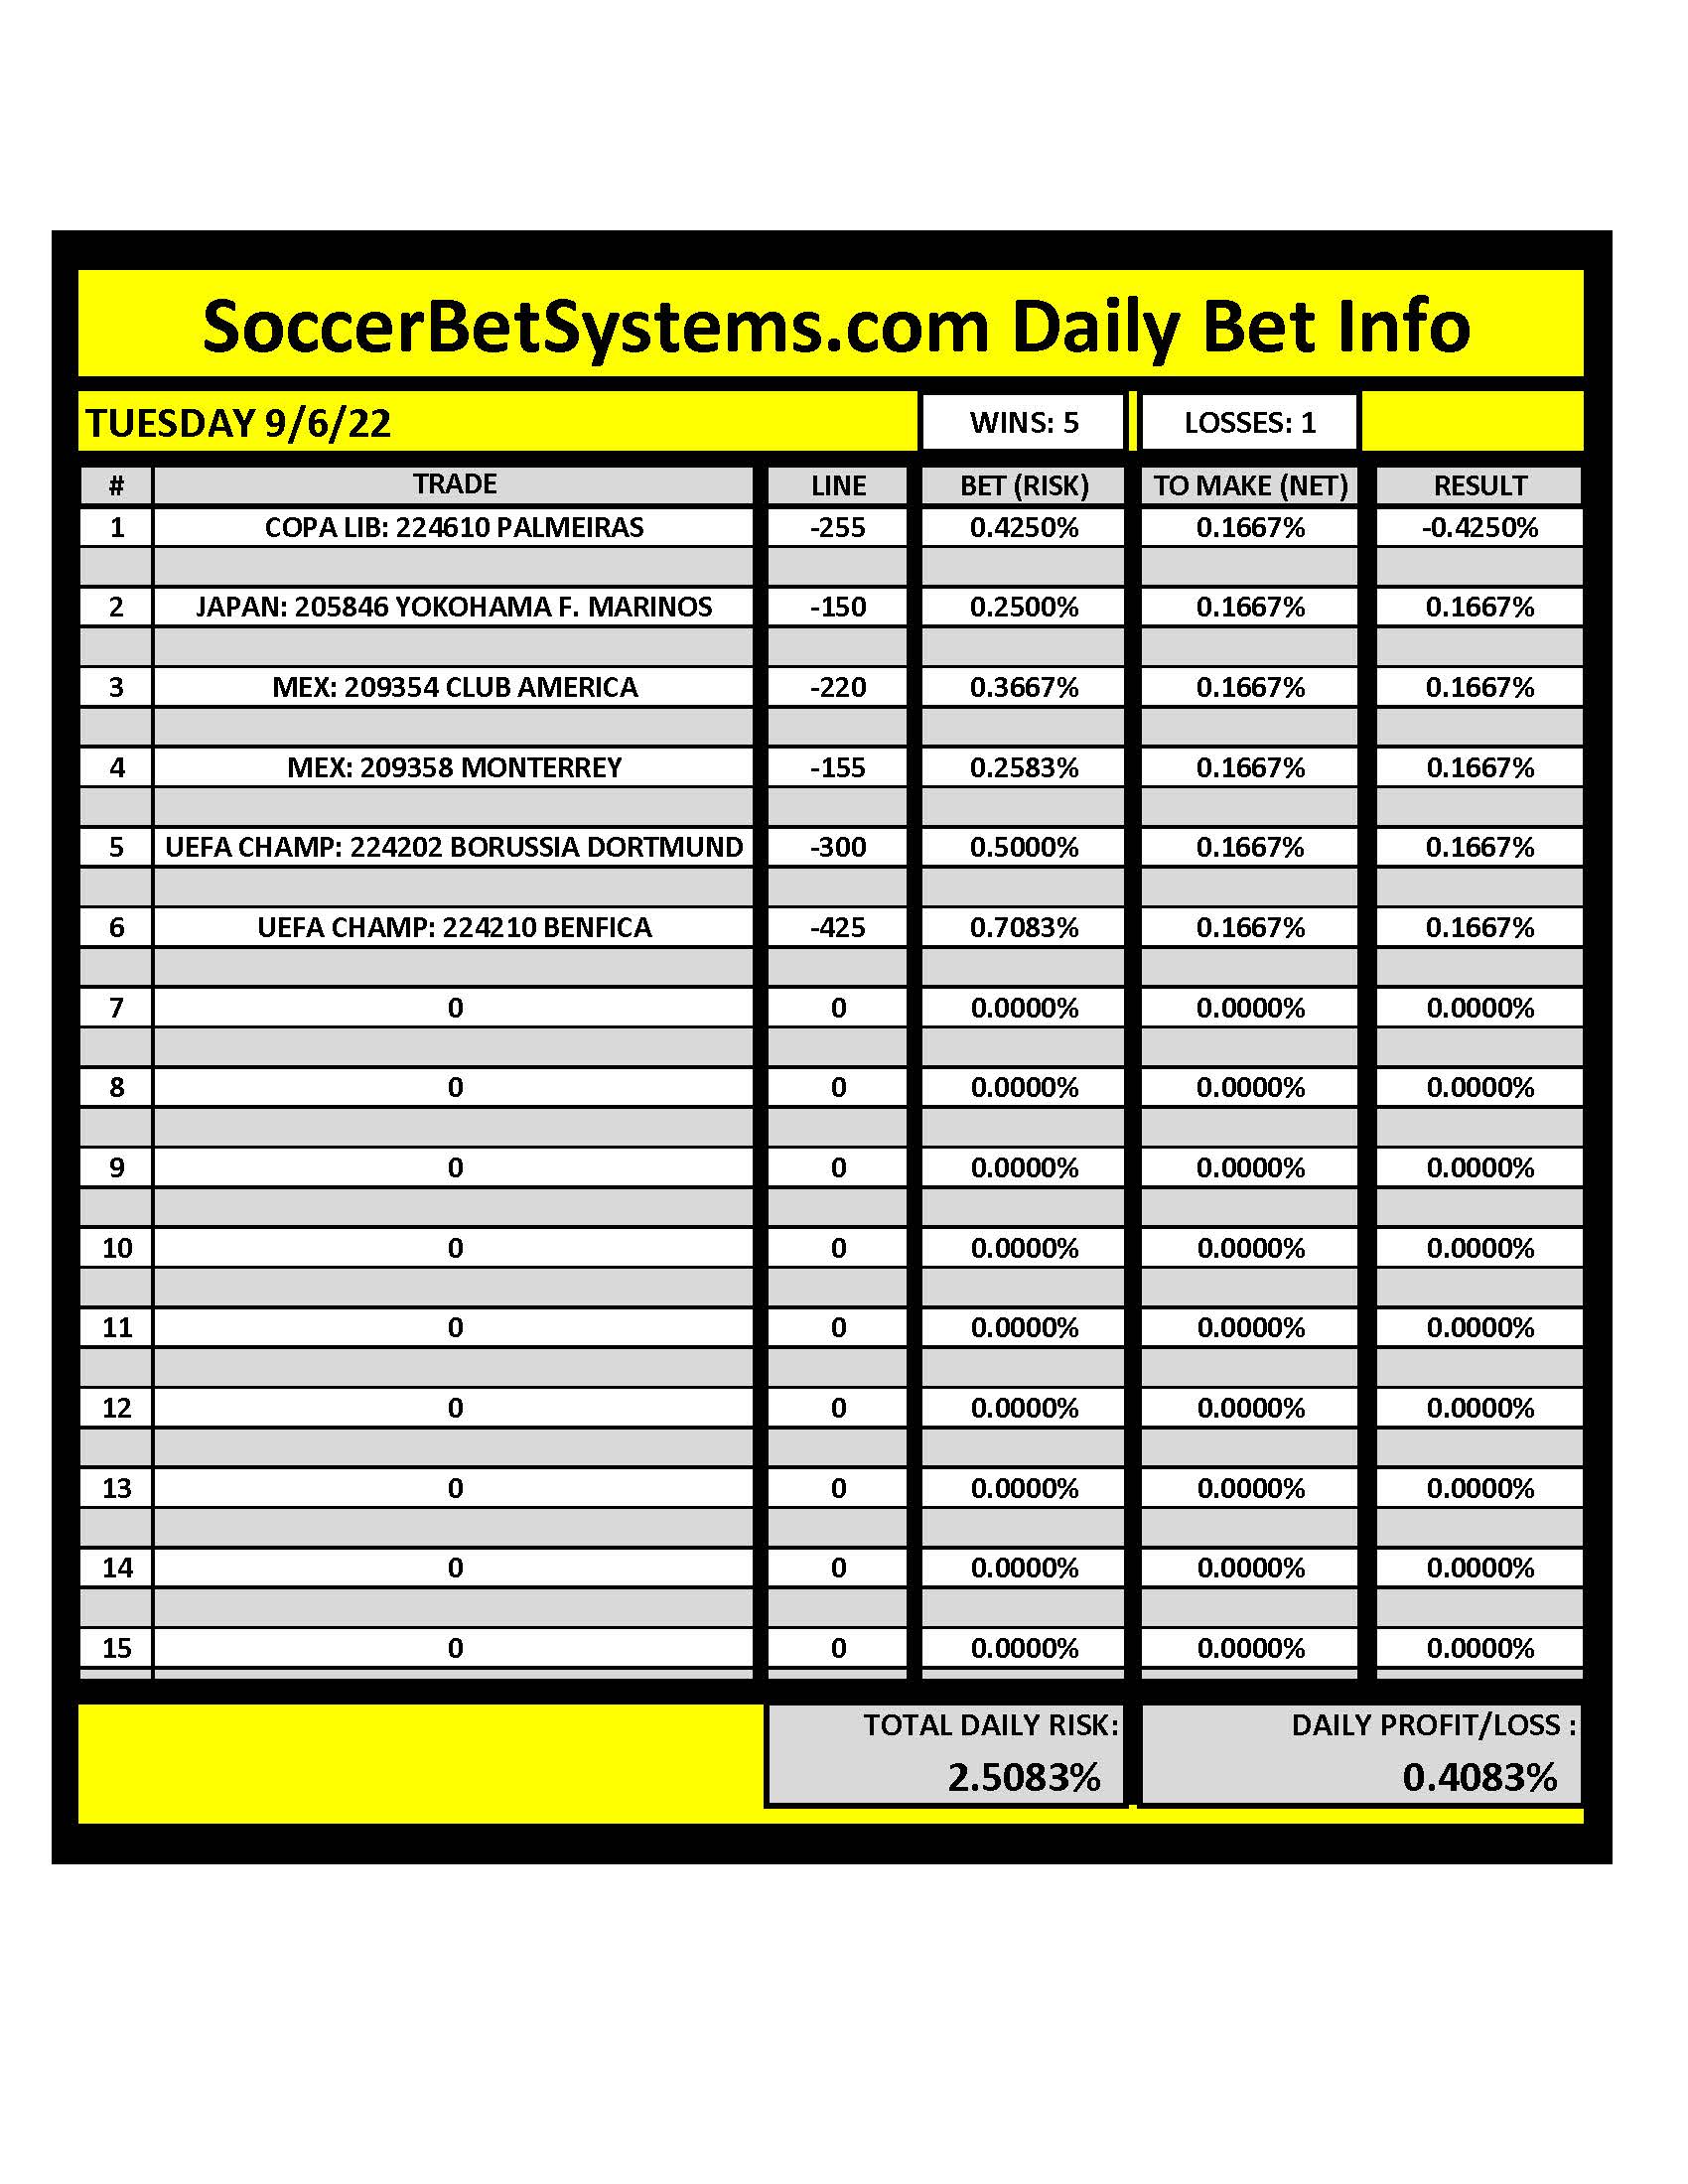 SoccerBetSystems.com 9/6/22 Daily Results